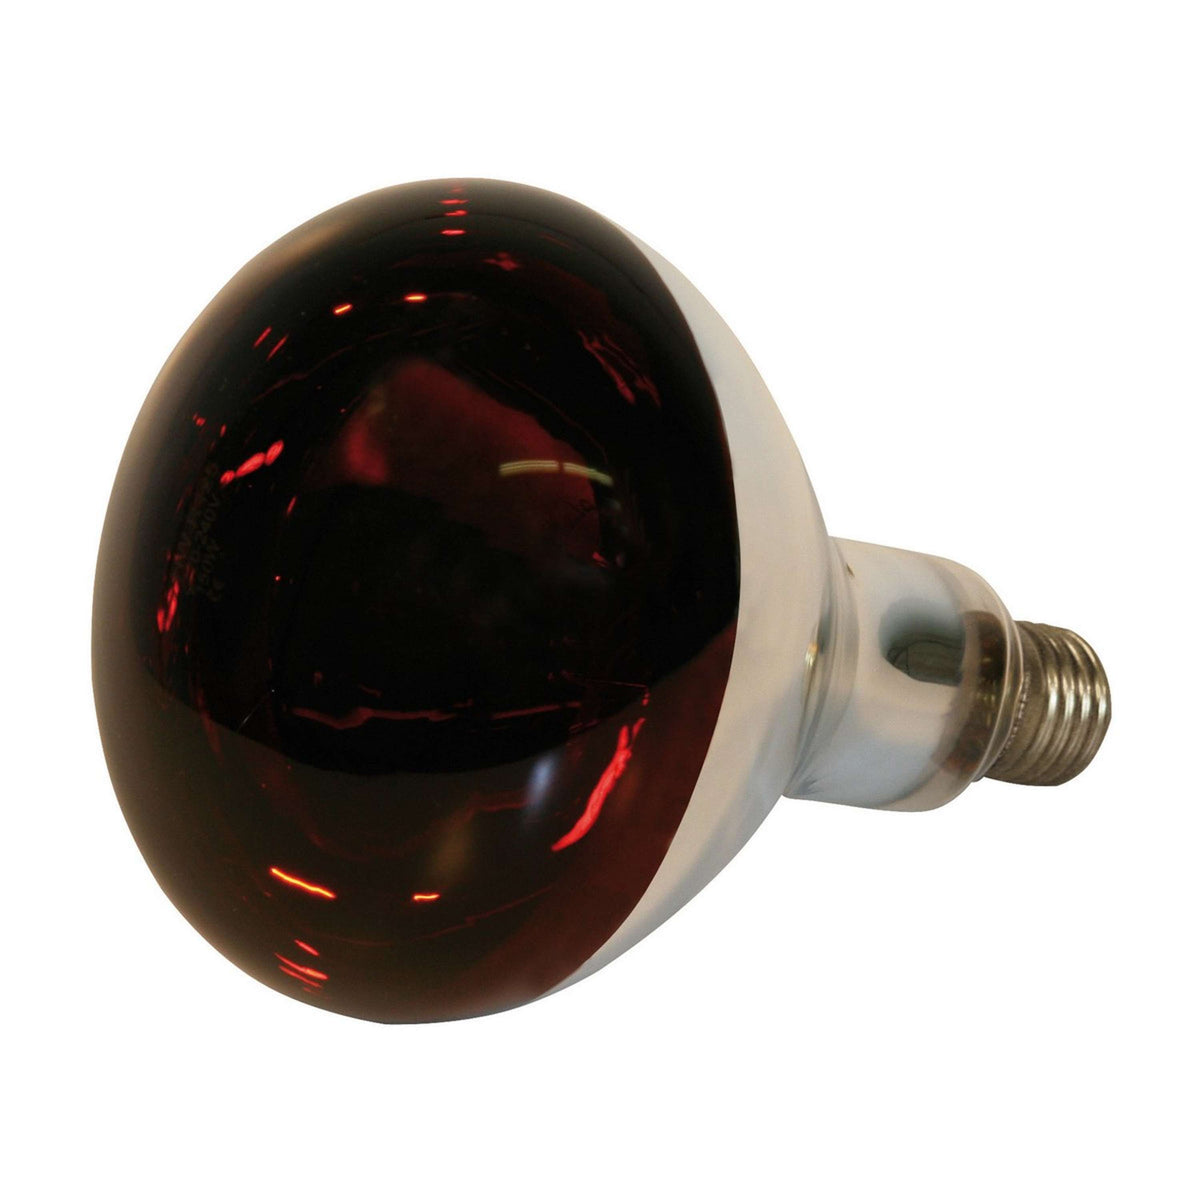 Kerbl Infrarotlampe Rot